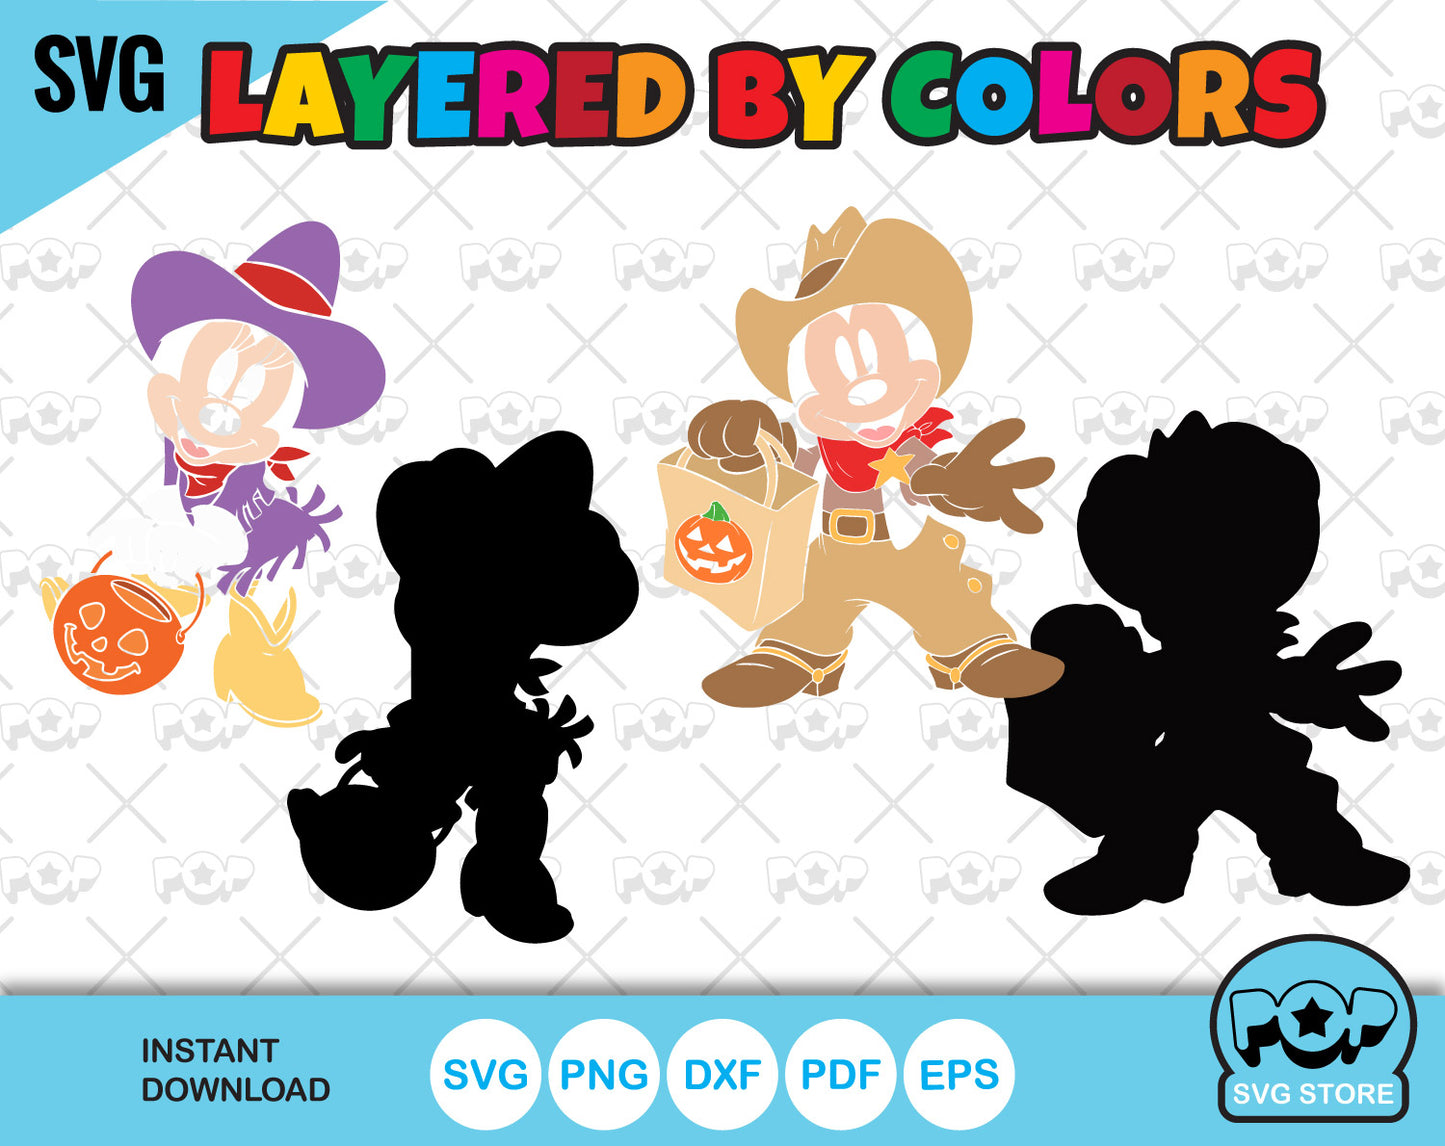 Disney Halloween 100 cliparts bundle, SVG cut files for Cricut / Silhouette,  Disney Halloween SVG, instant download